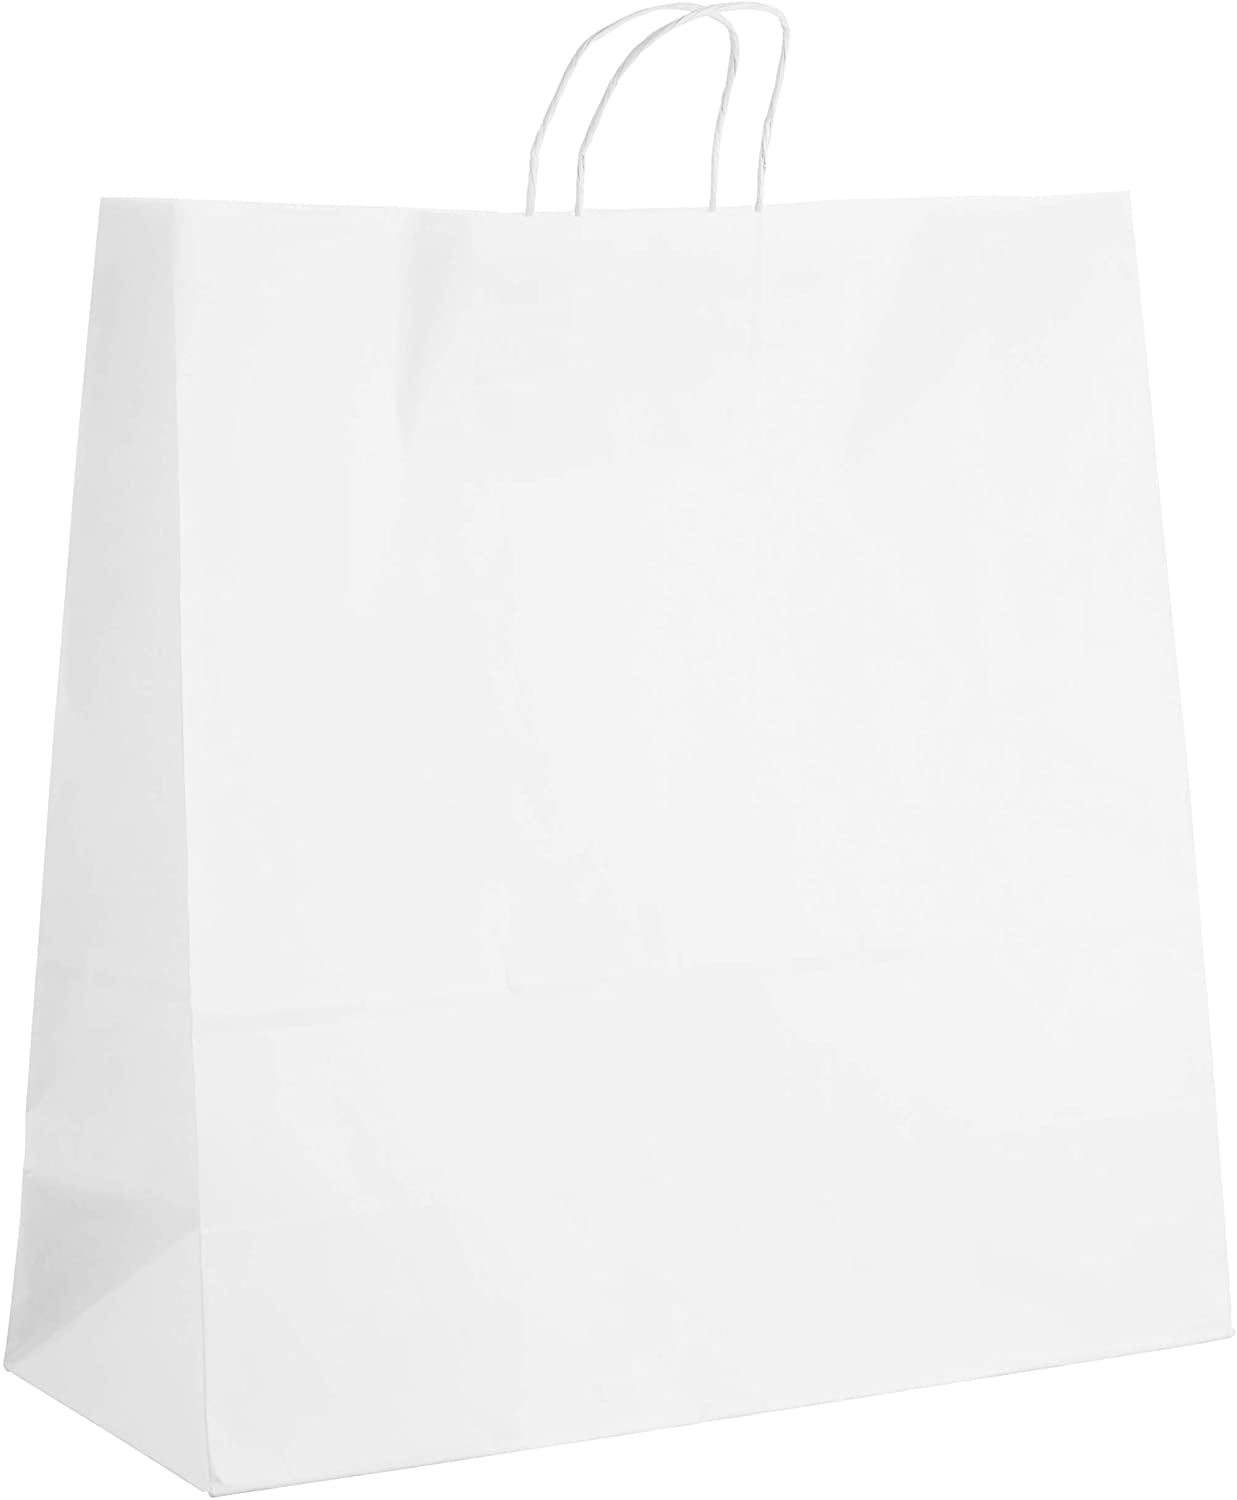 13x7x17-Inch Kraft Paper Shopping Bag with Handles SafePro SEN 250/CS 